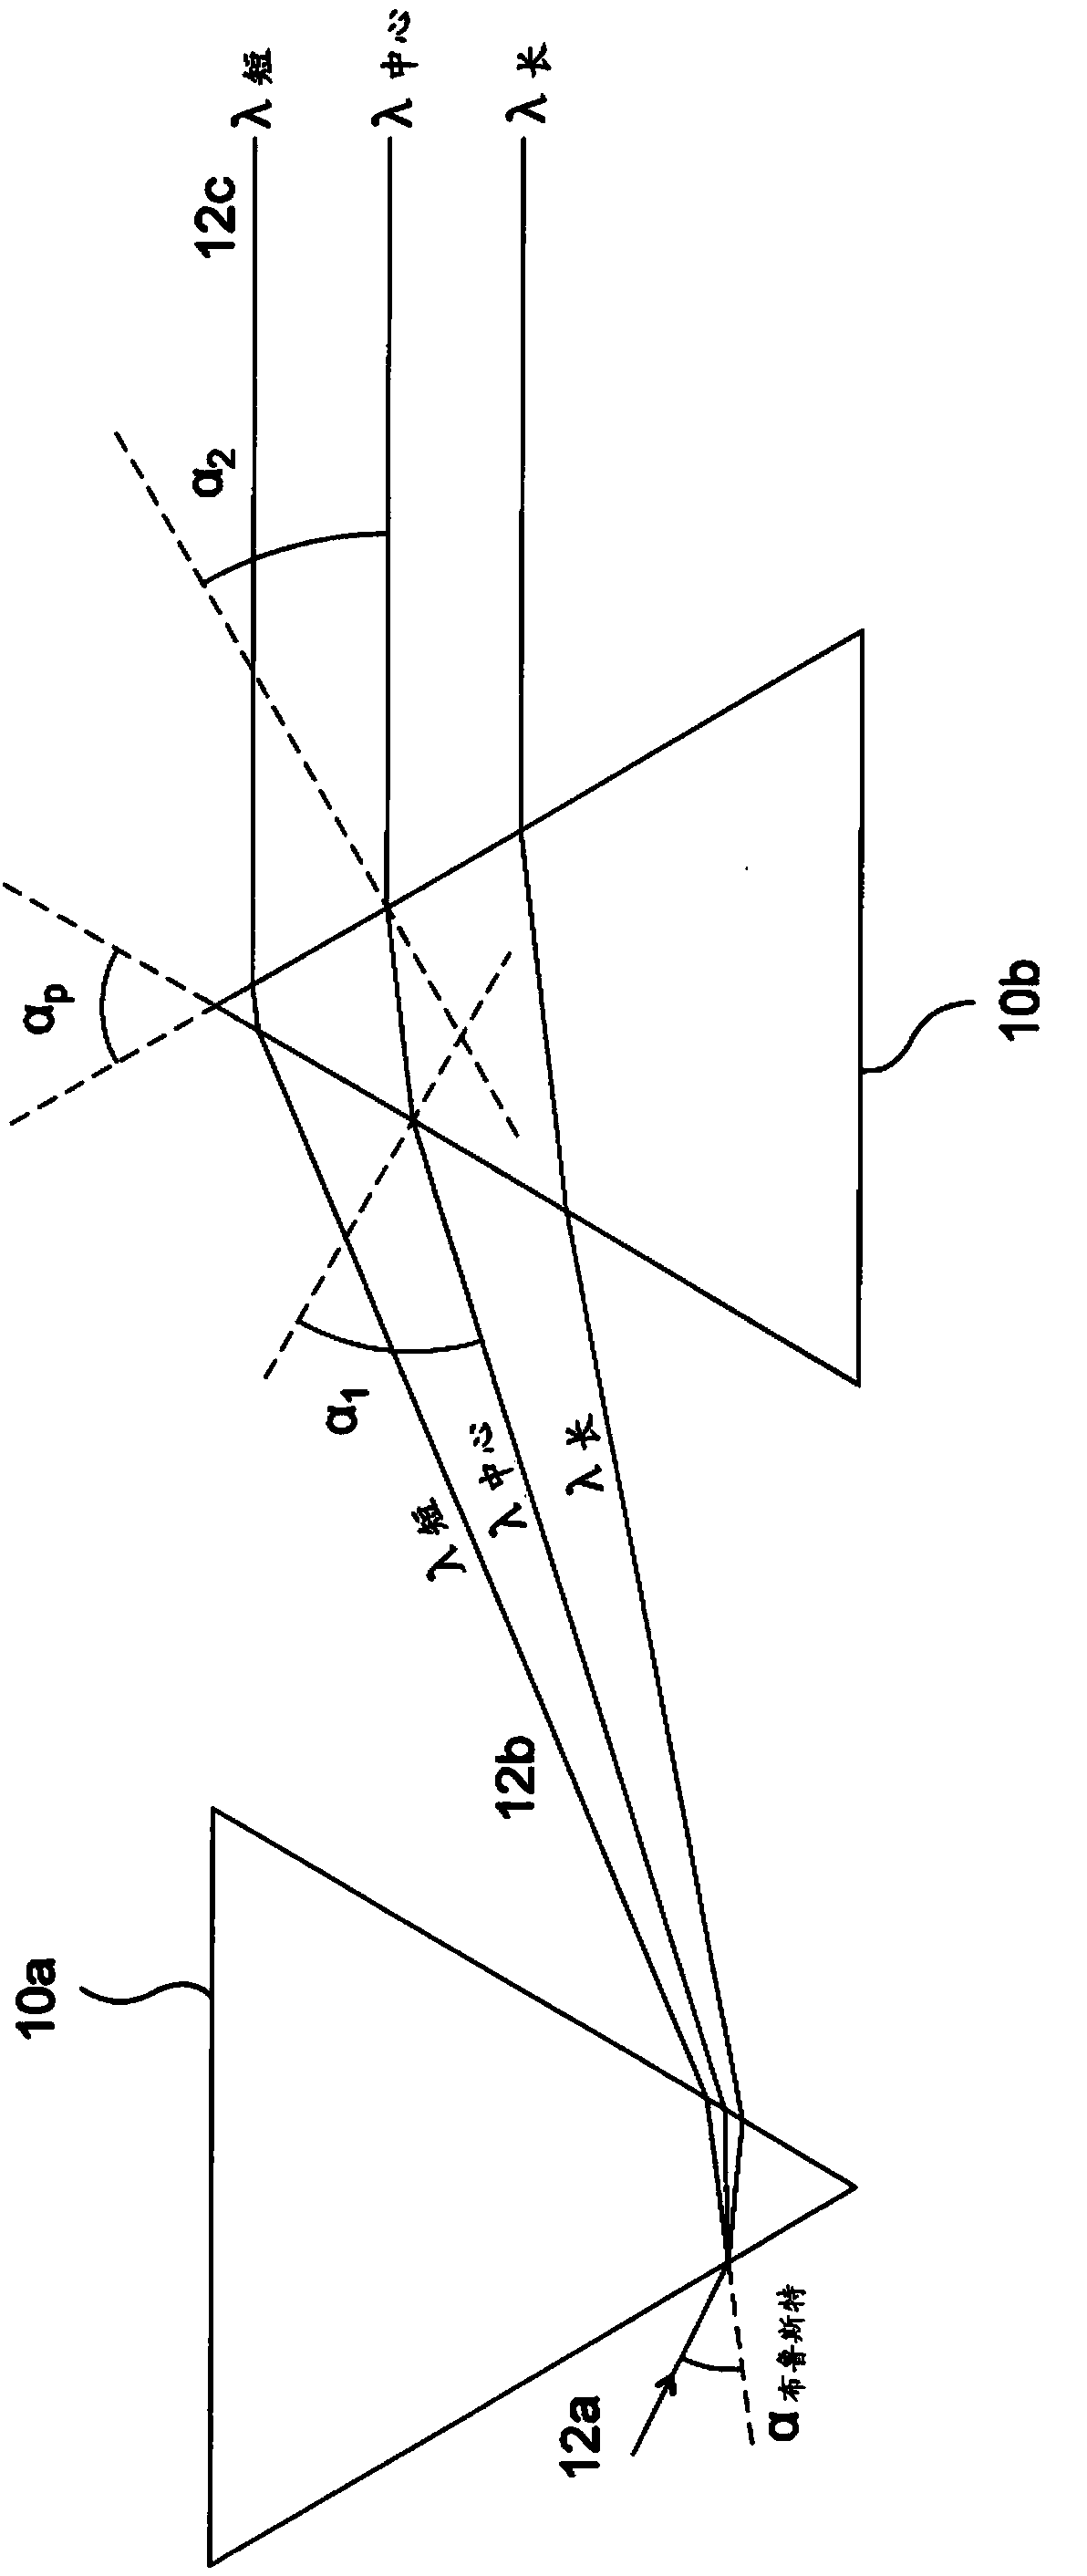 Compensator system and method for compensating angular dispersion